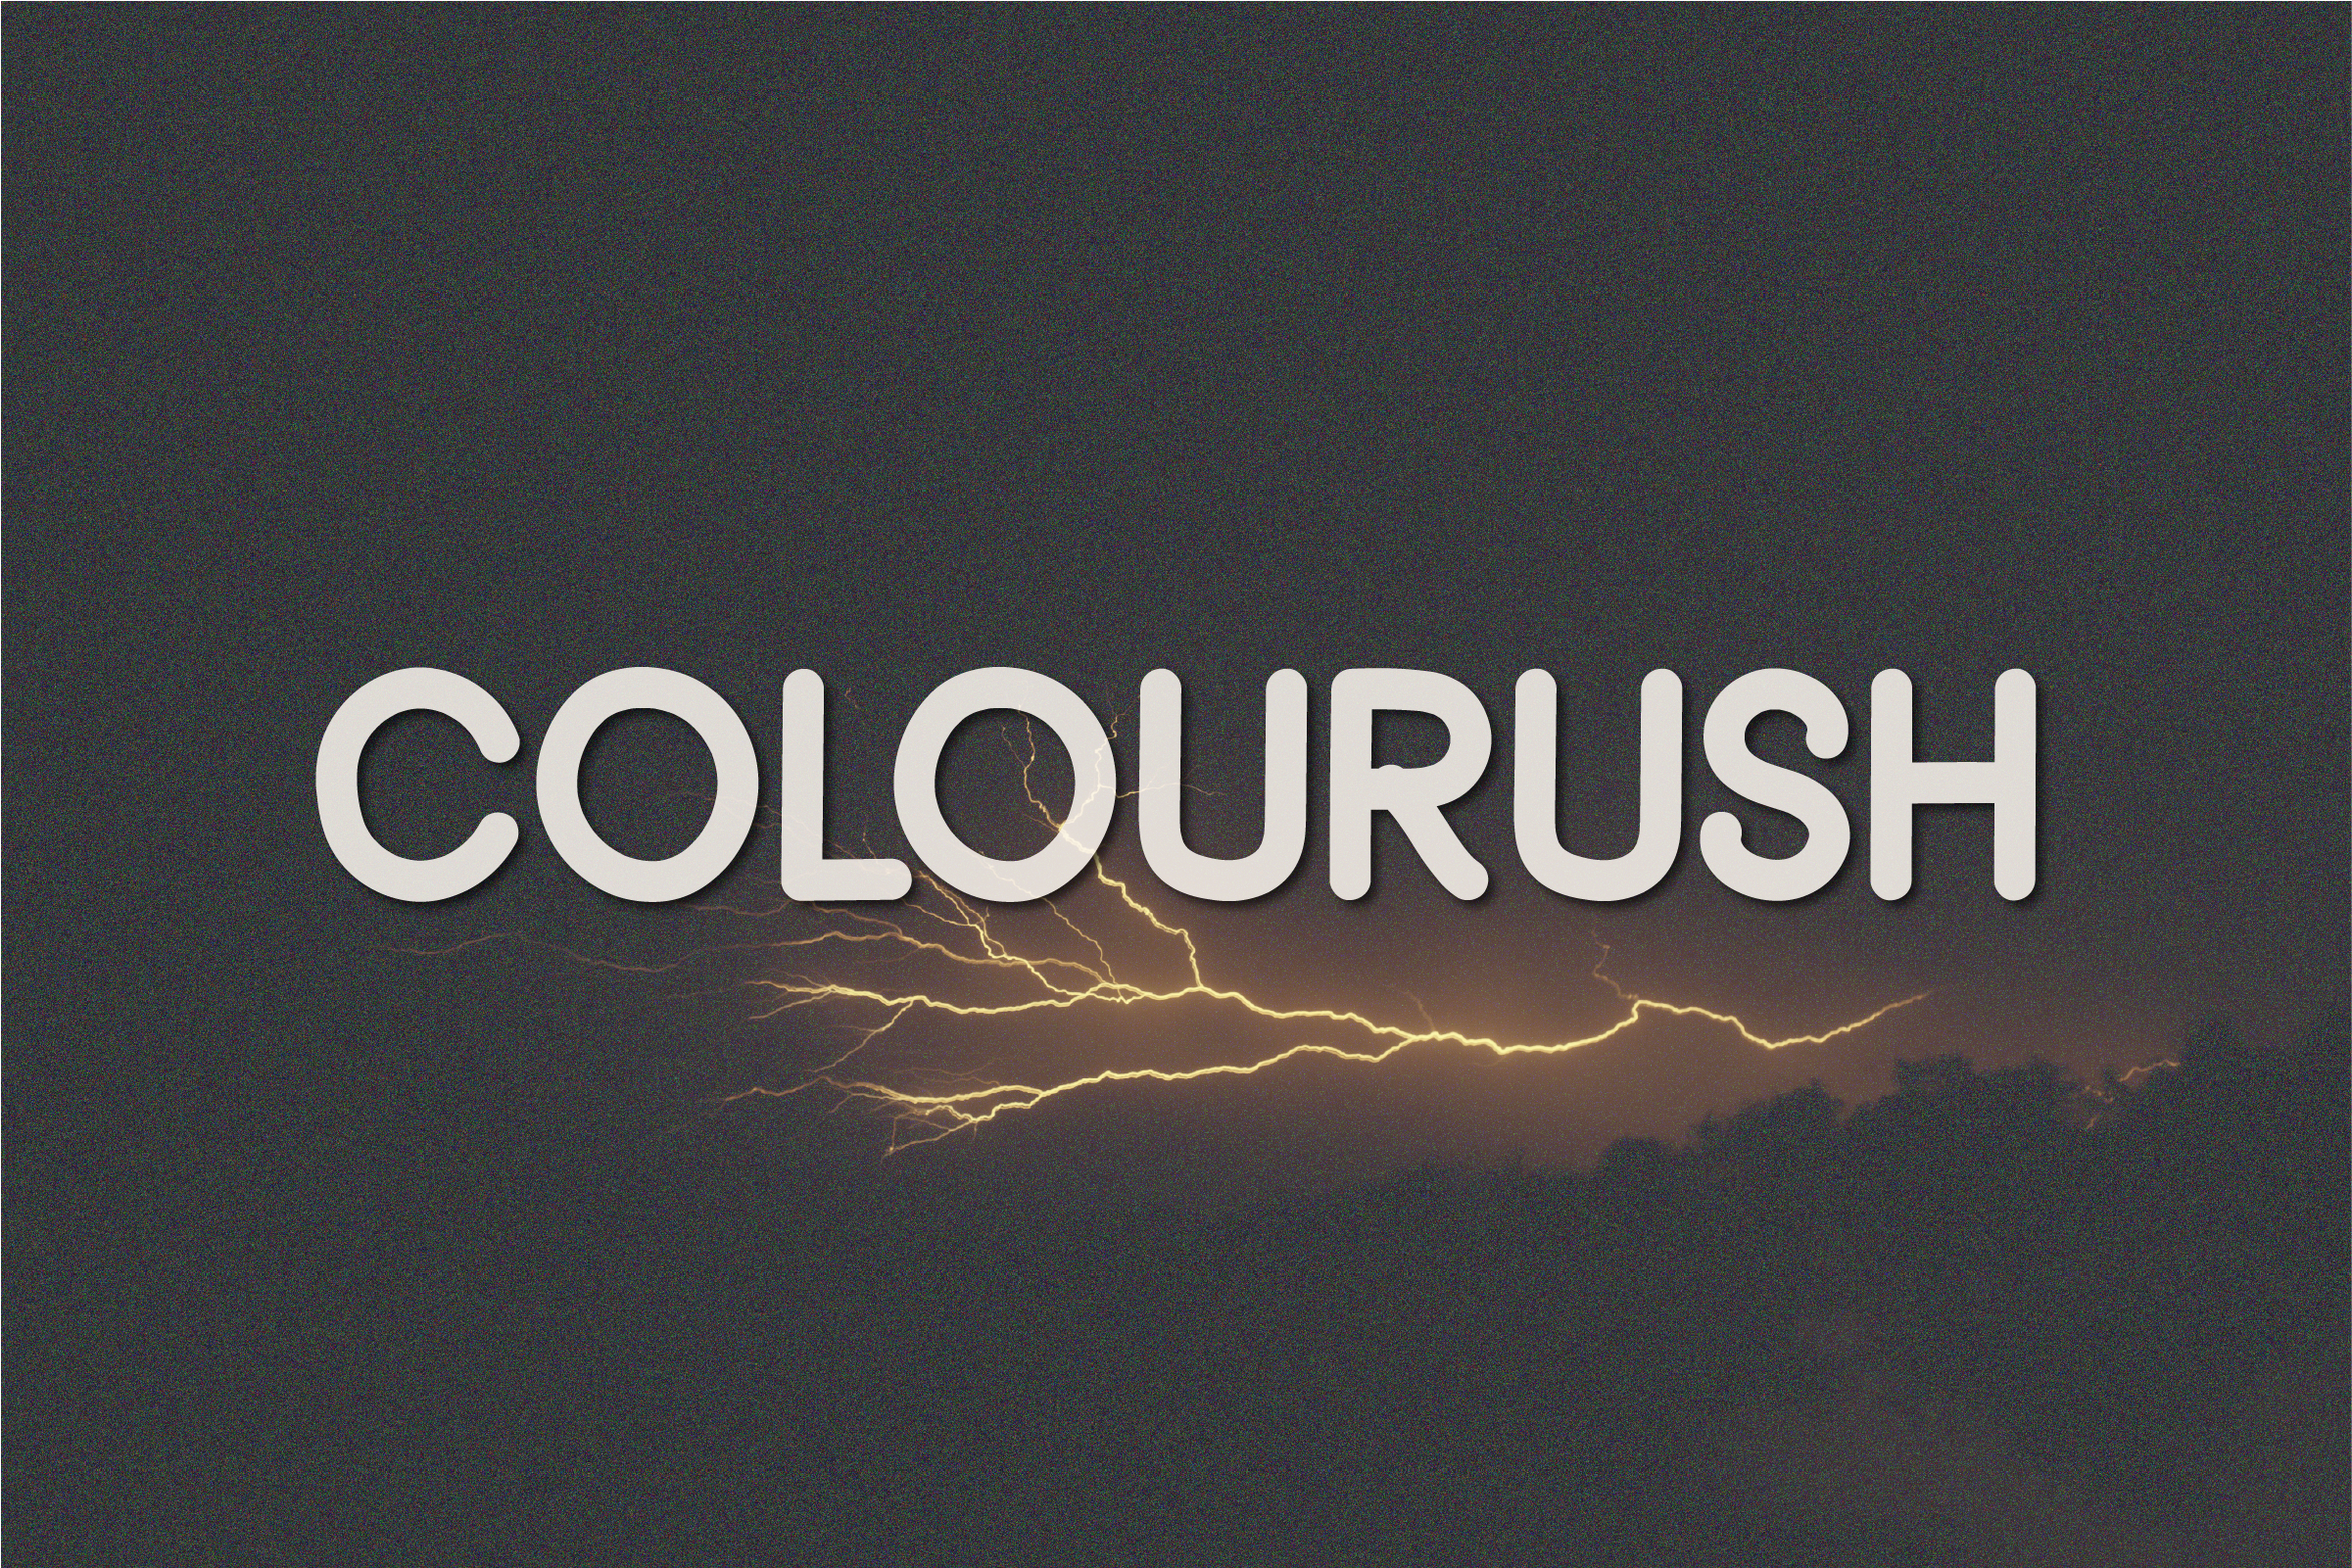 Colourush